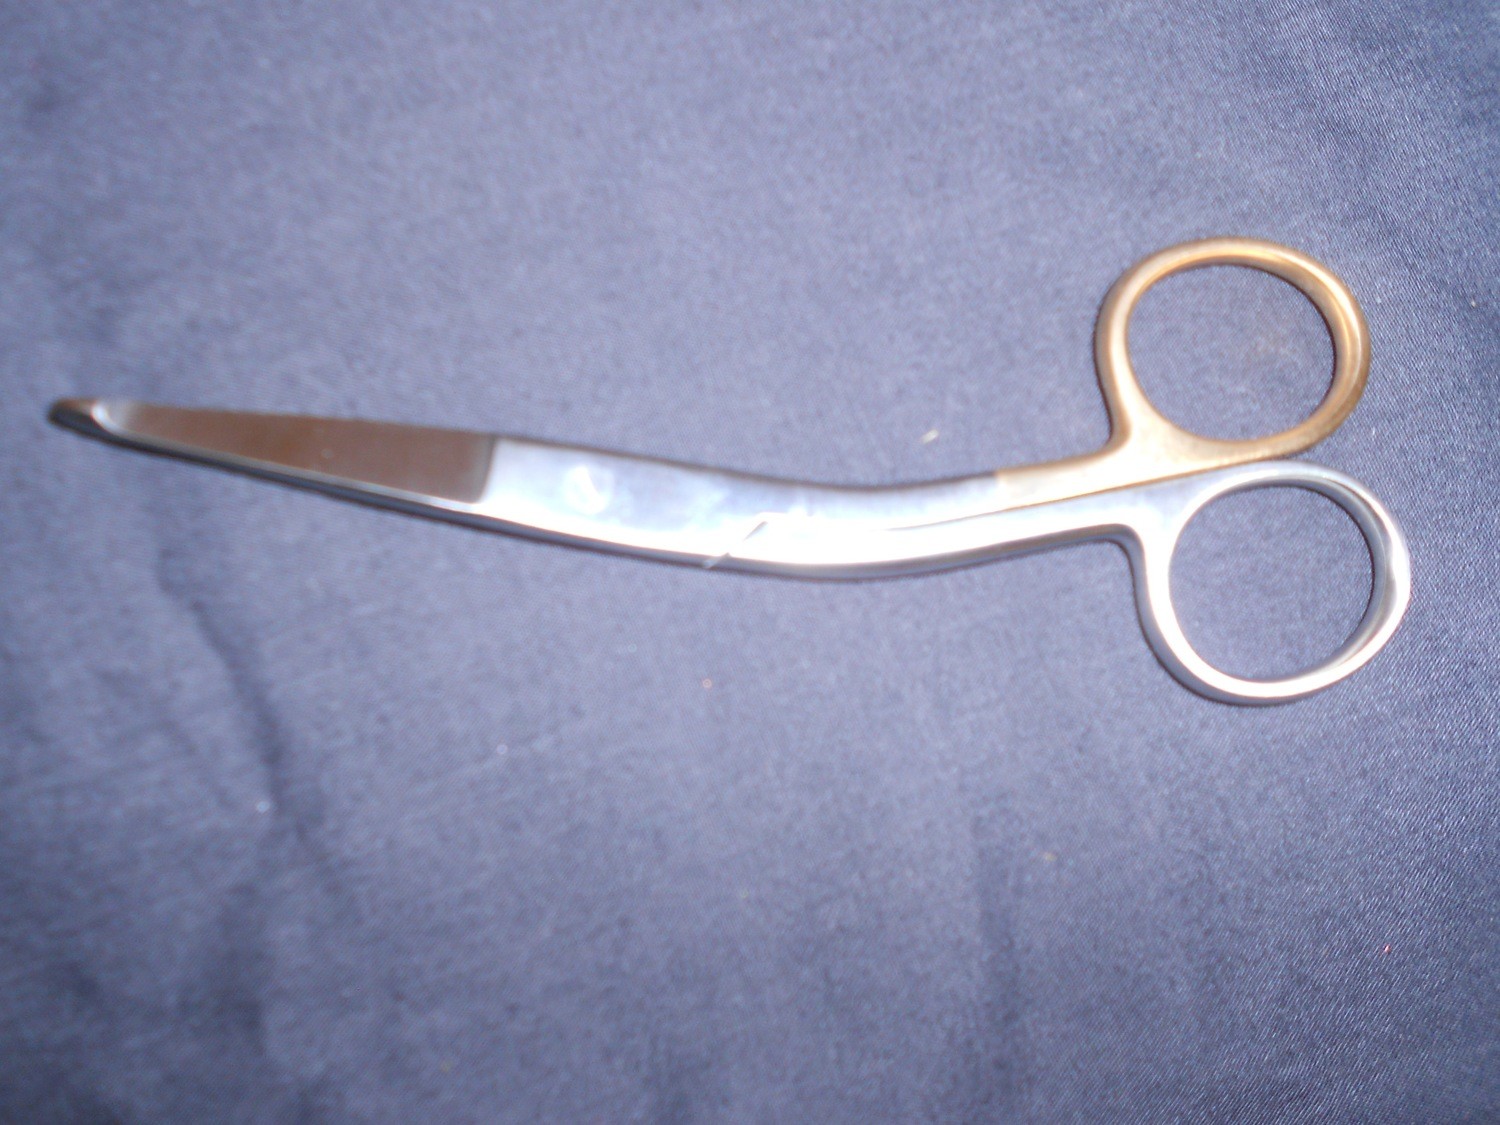 HI-LEVEL Bandage Scissors 5½